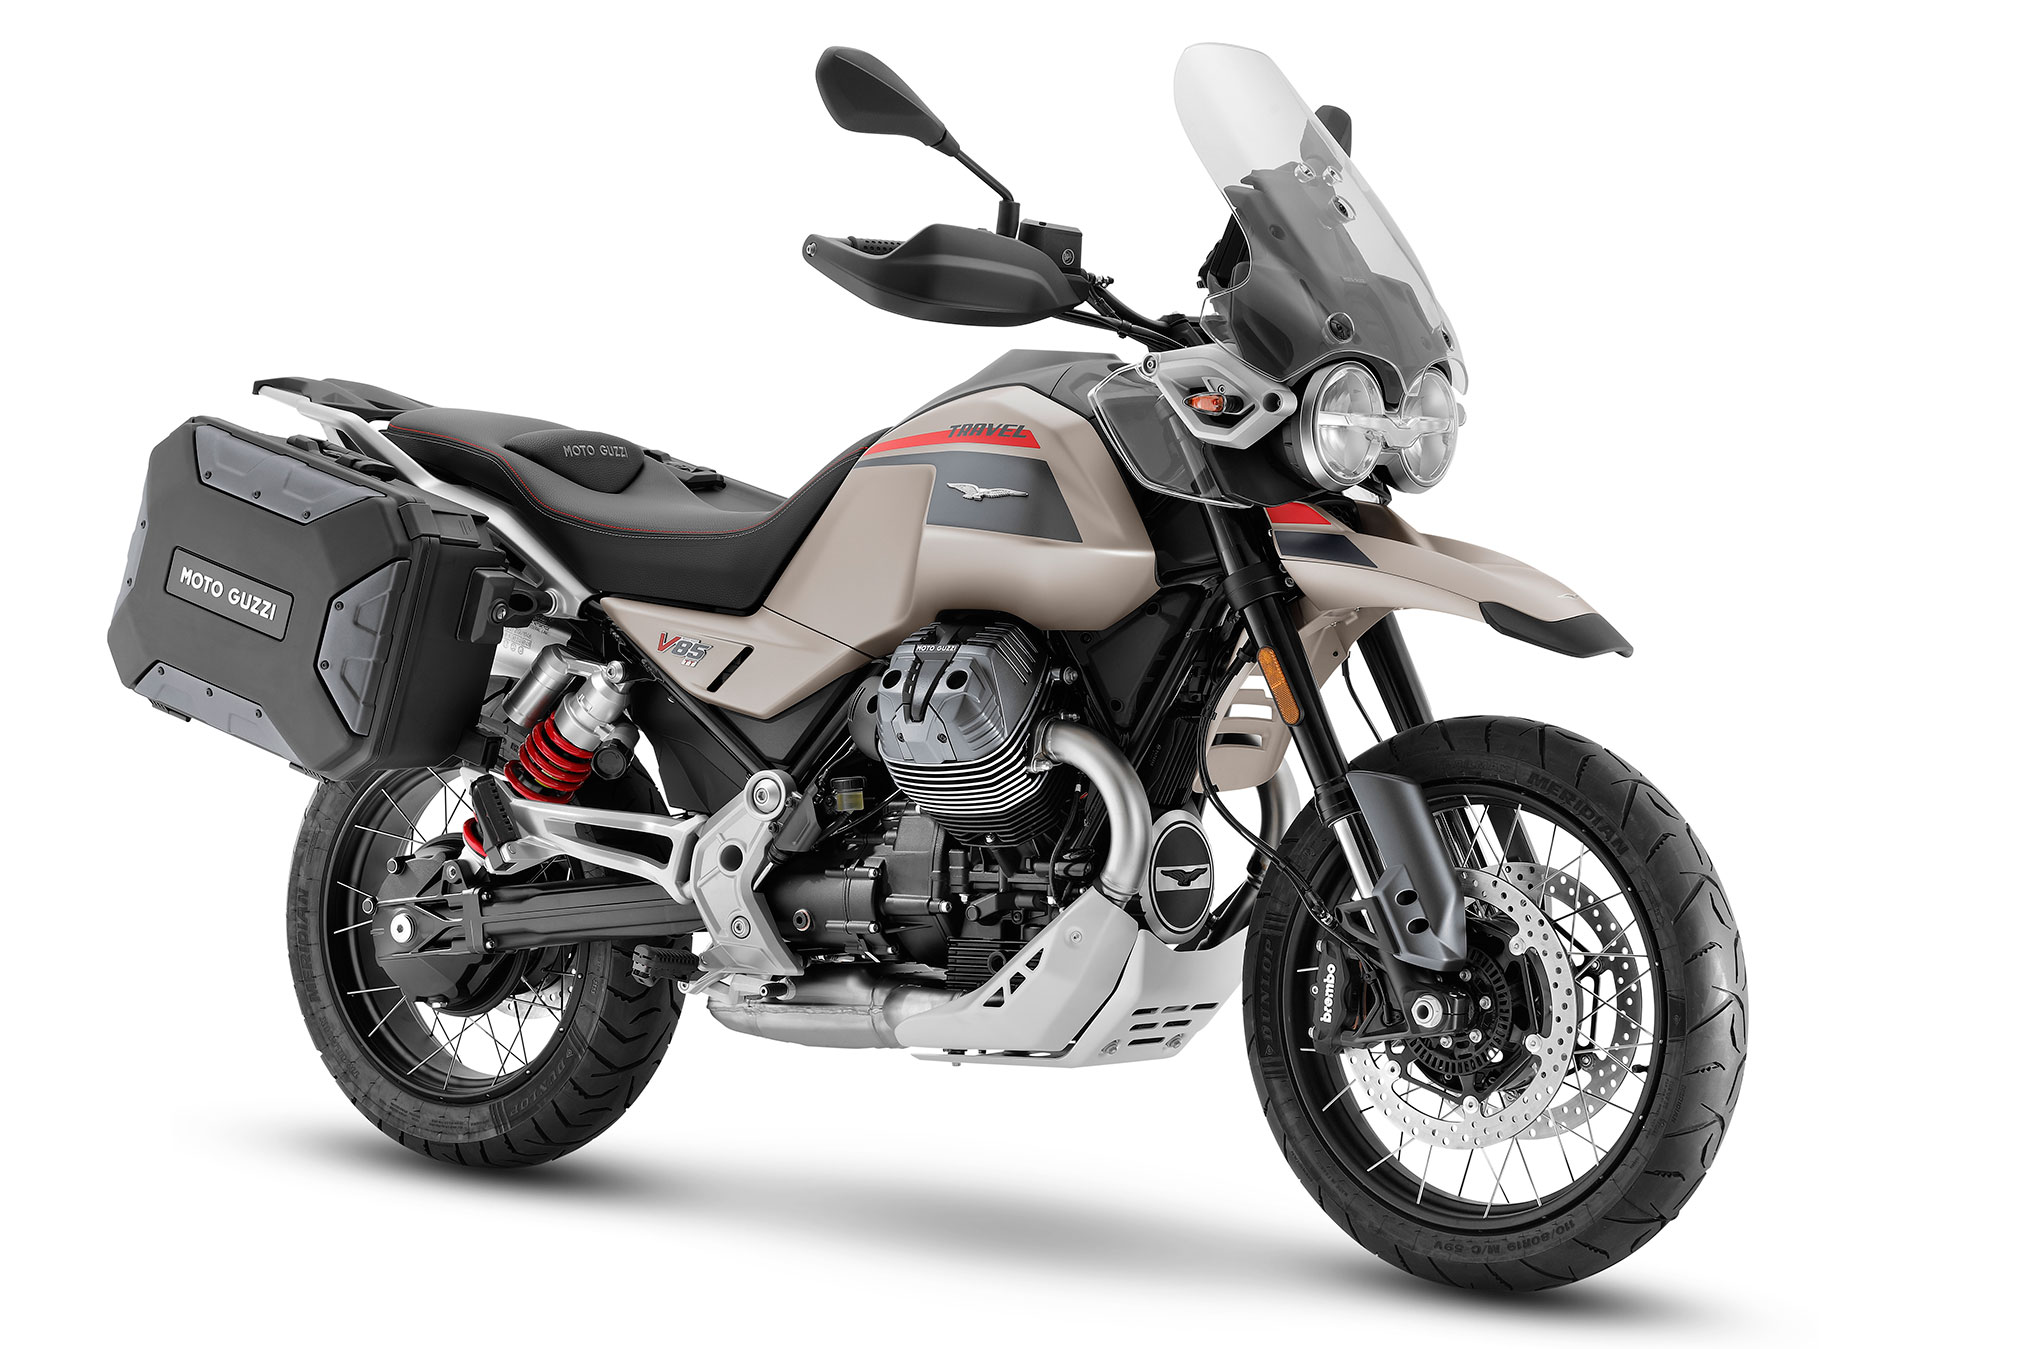 New 2024 Beta Explorer E-Moto Model Specs and Price - Cycle News